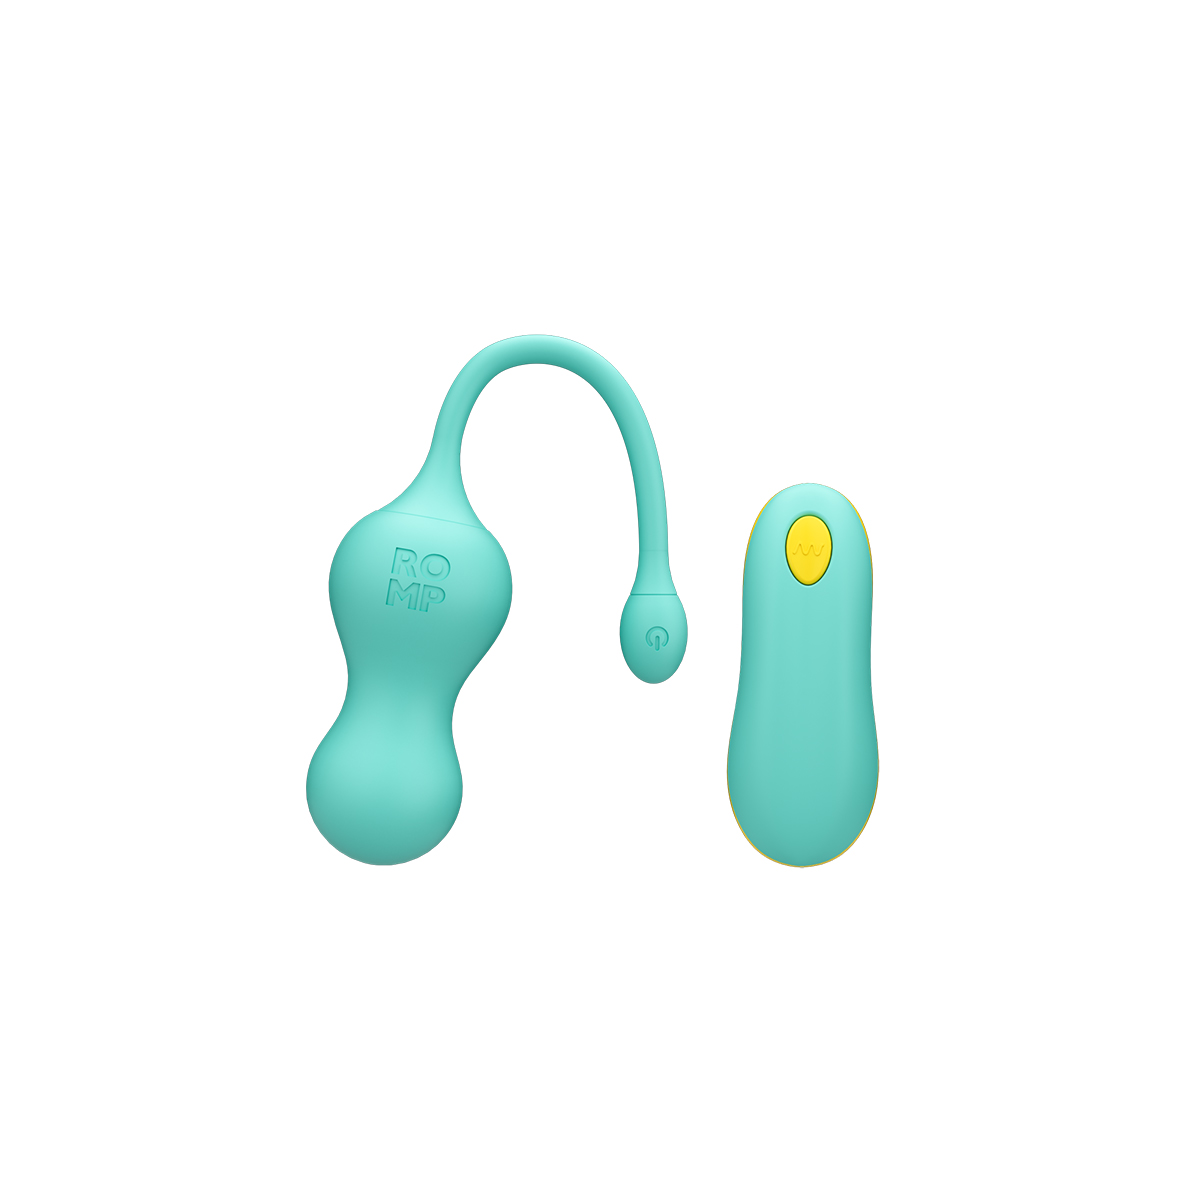 Buy a ROMP Cello Vibrating Egg  Aqua vibrator.